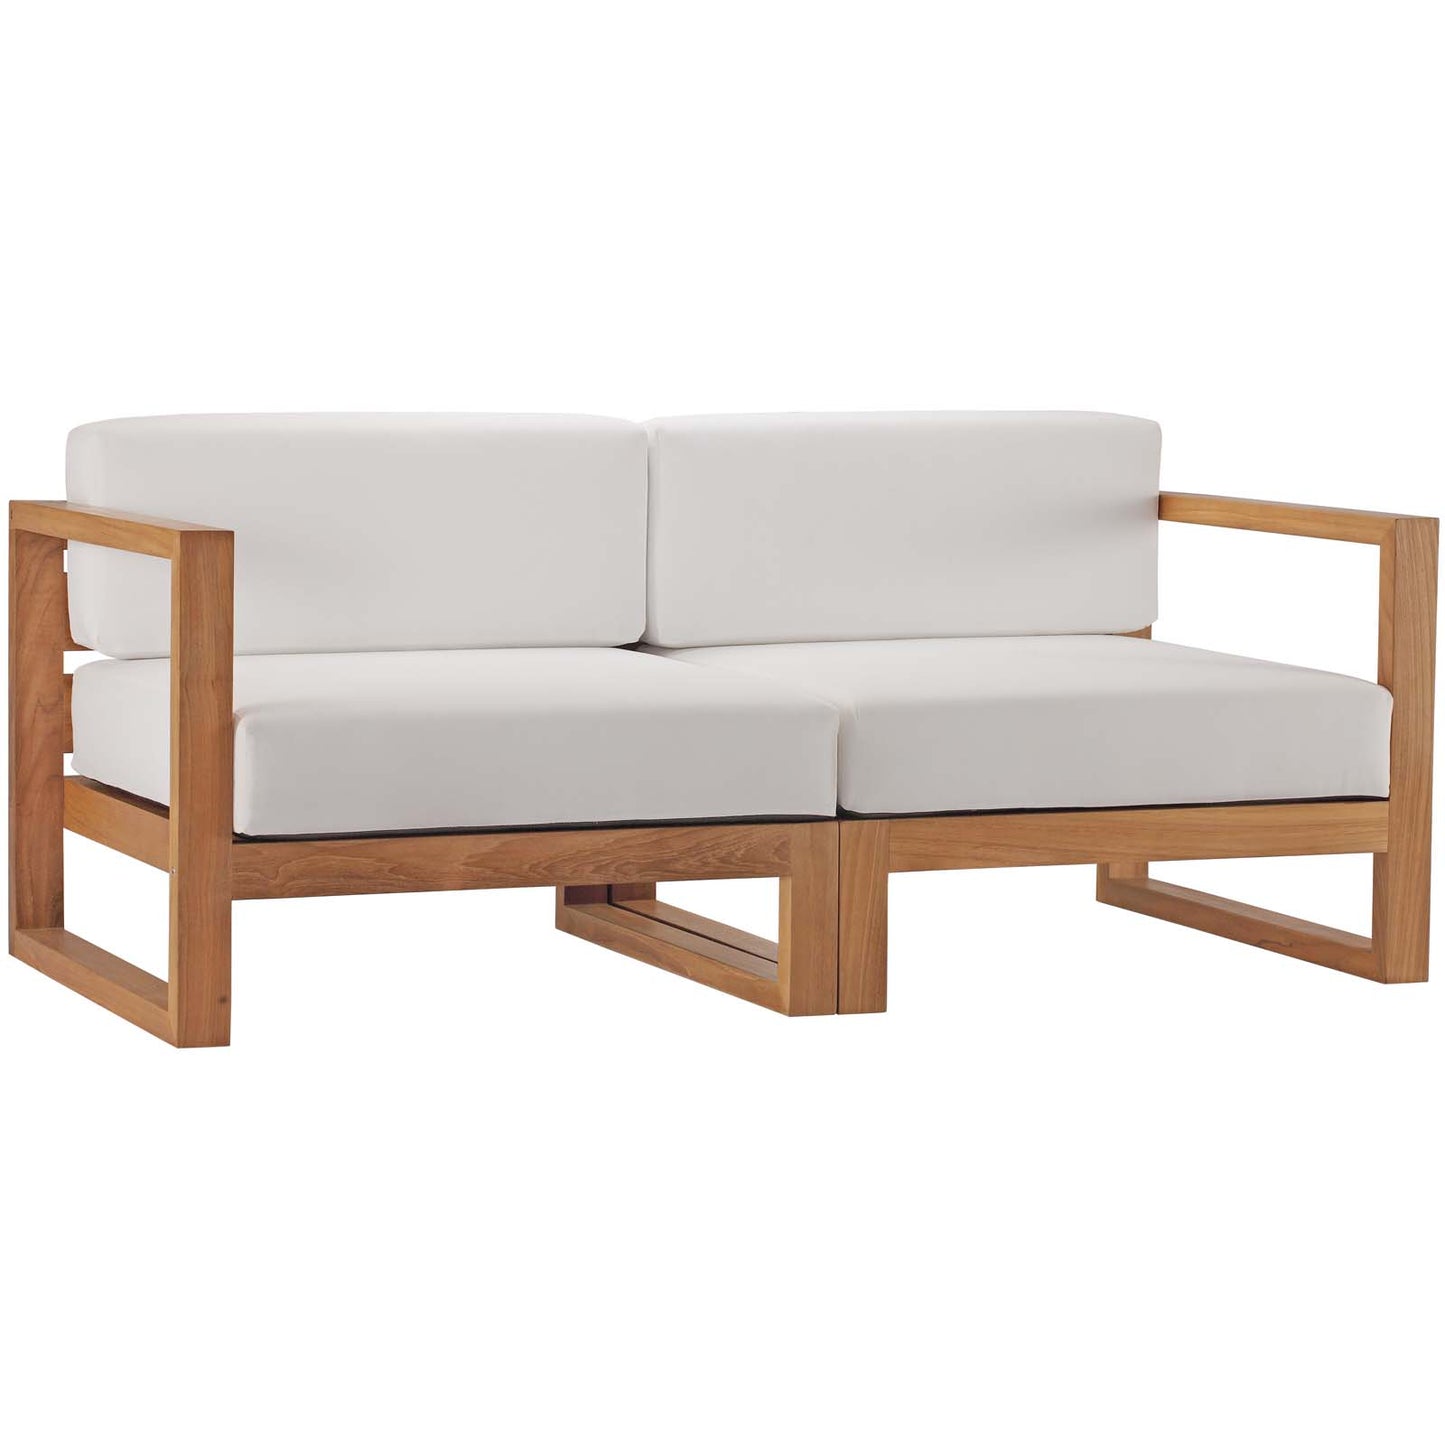 Upland Outdoor Patio Teak Wood 2-Piece Sectional Sofa Loveseat Natural White EEI-4256-NAT-WHI-SET